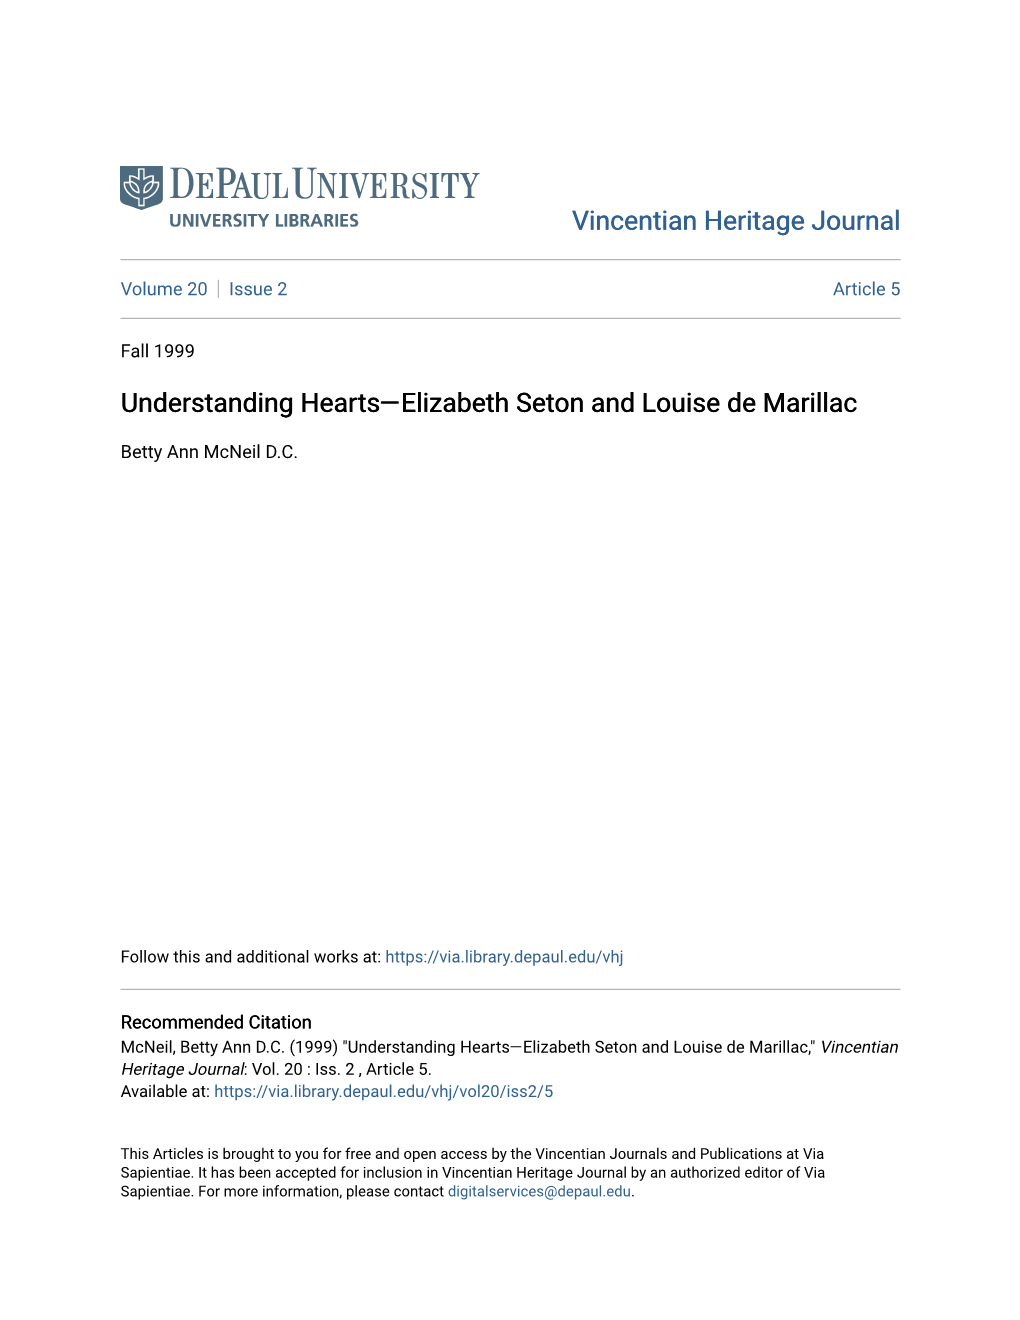 Understanding Hearts—Elizabeth Seton and Louise De Marillac